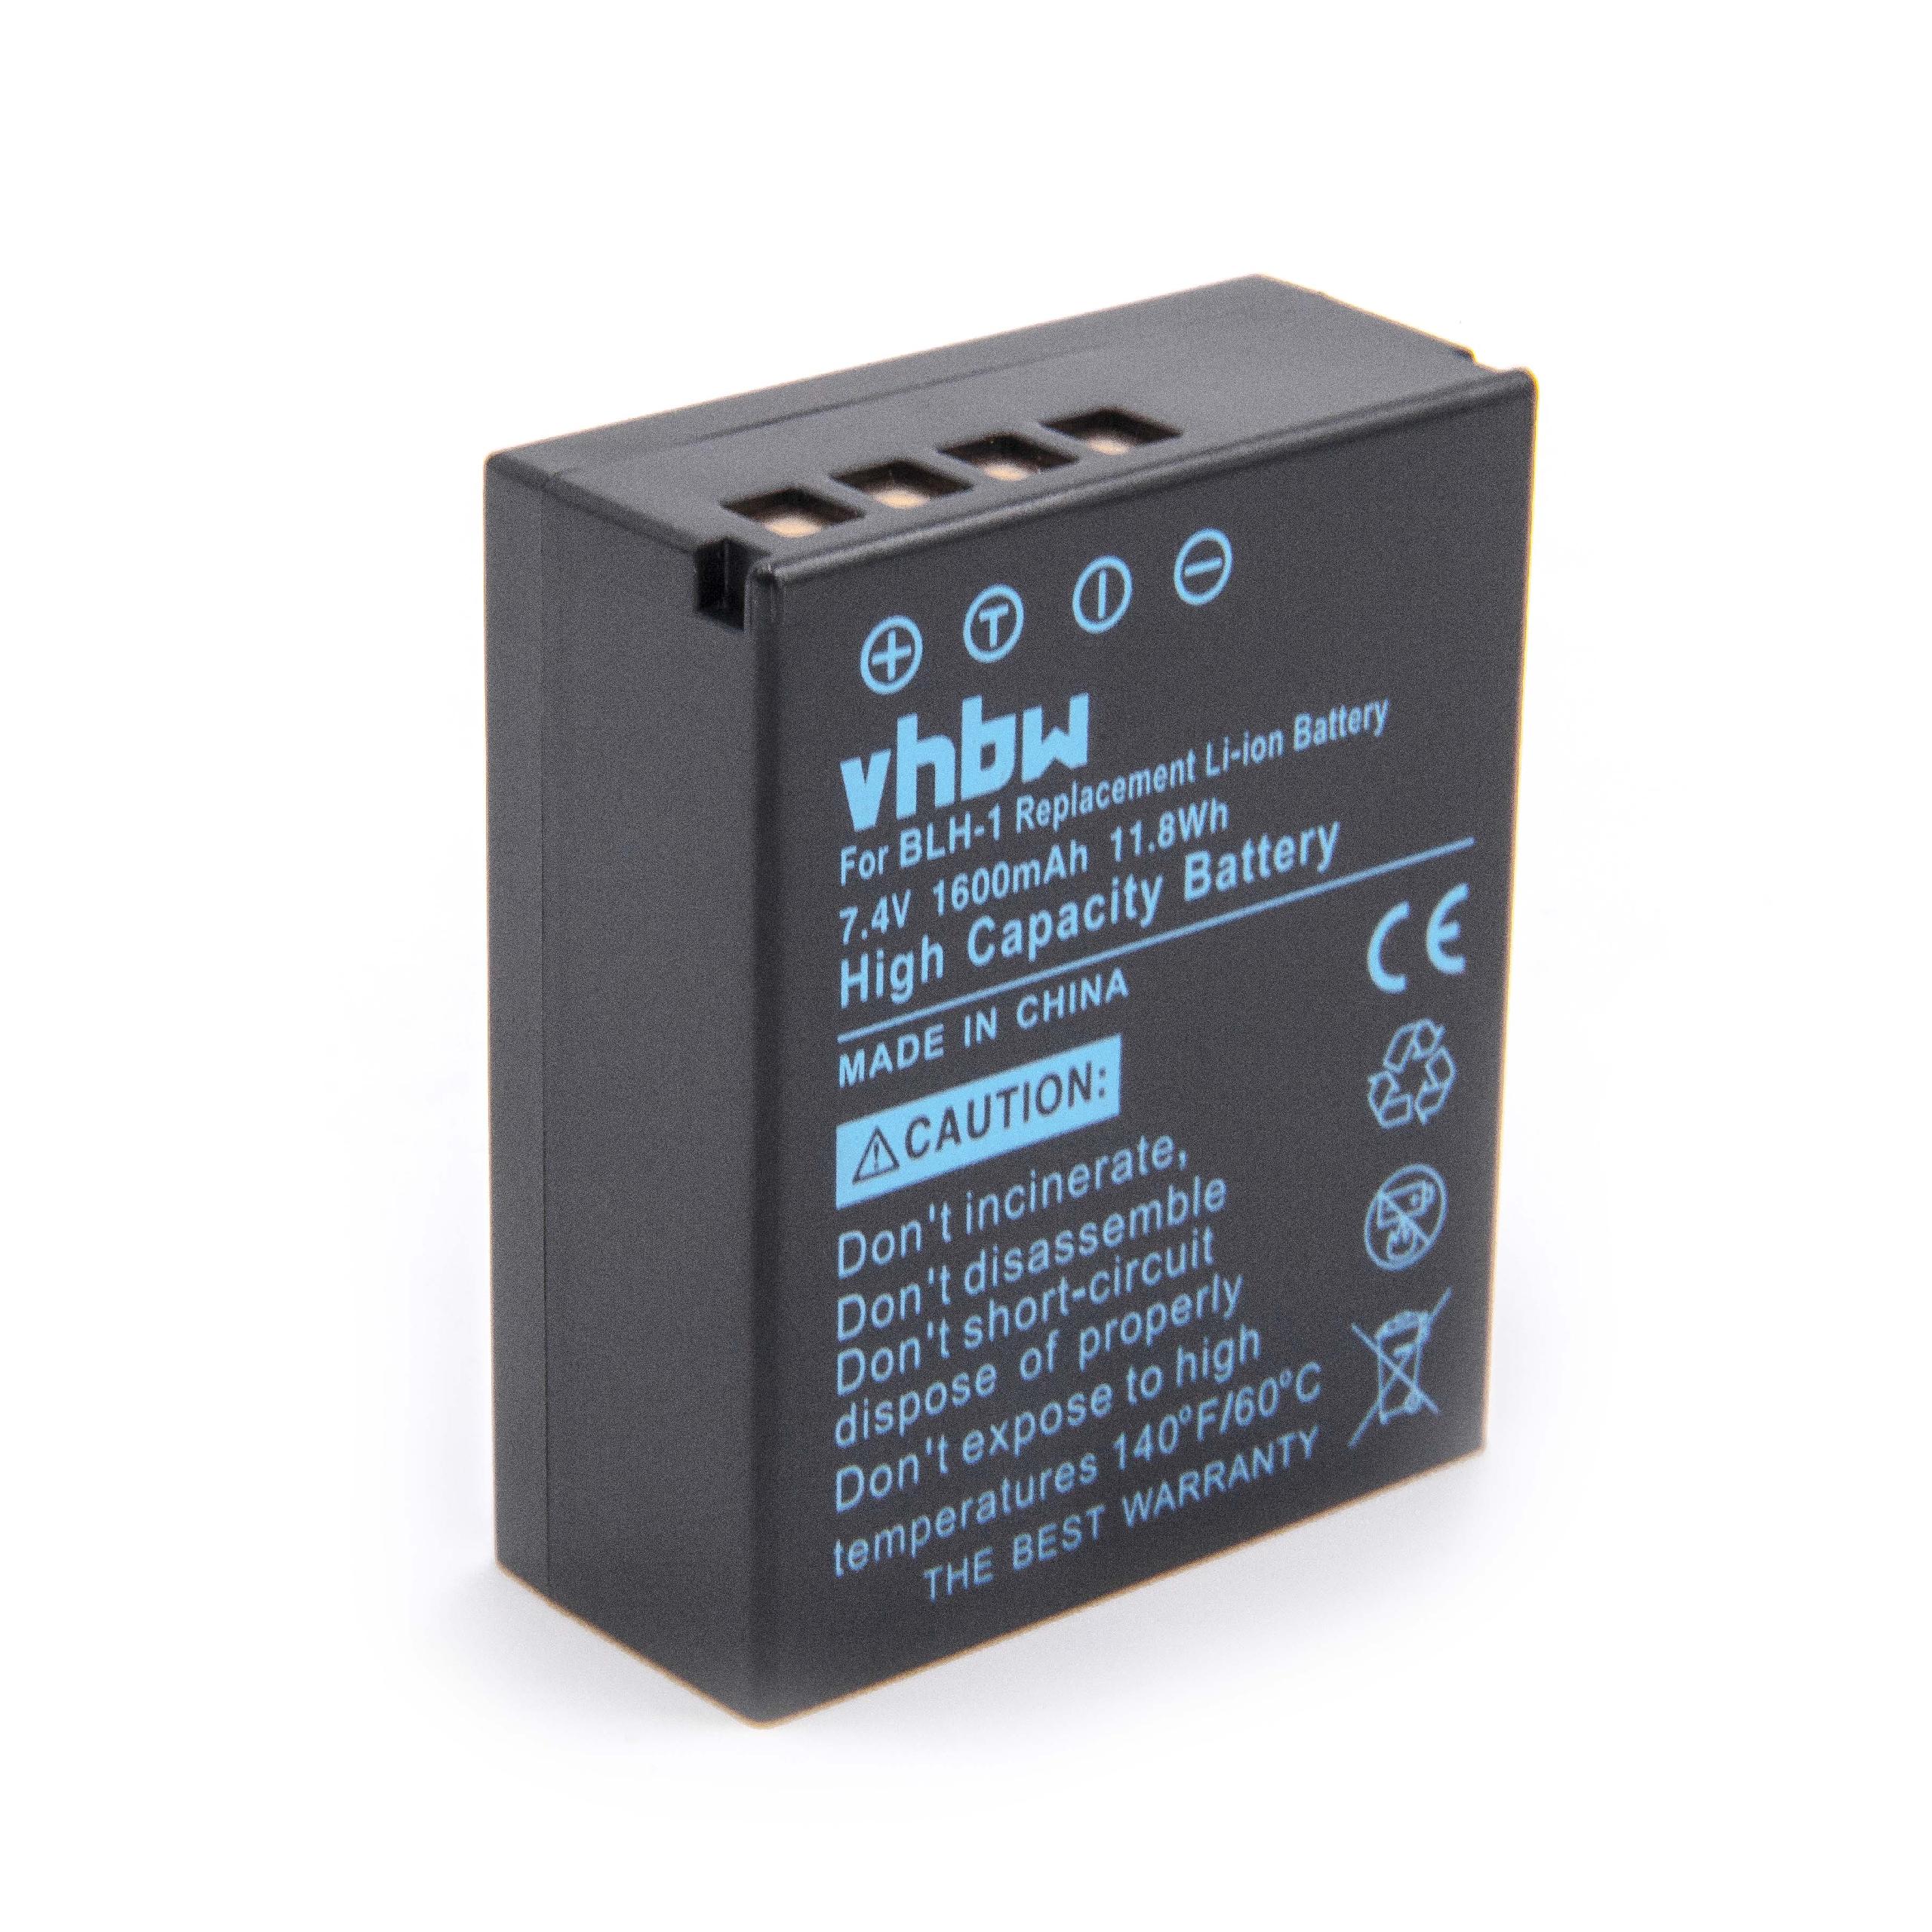 Batteria sostituisce Olympus BLH-1 per fotocamera Olympus - 1600mAh 7,4V Li-Ion